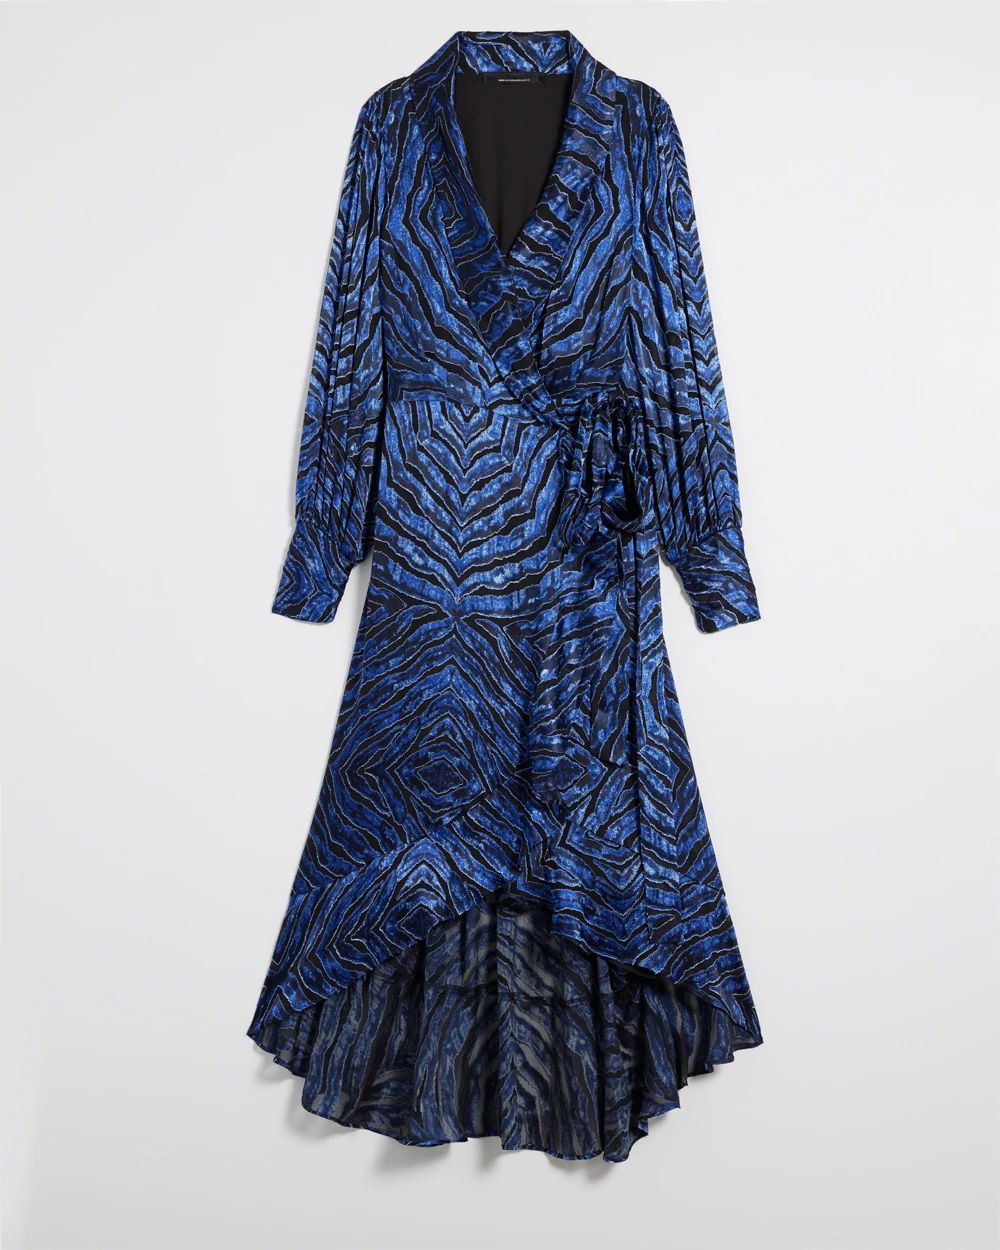 Petite Long Sleeve Silk Burnout Wrap Dress click to view larger image.